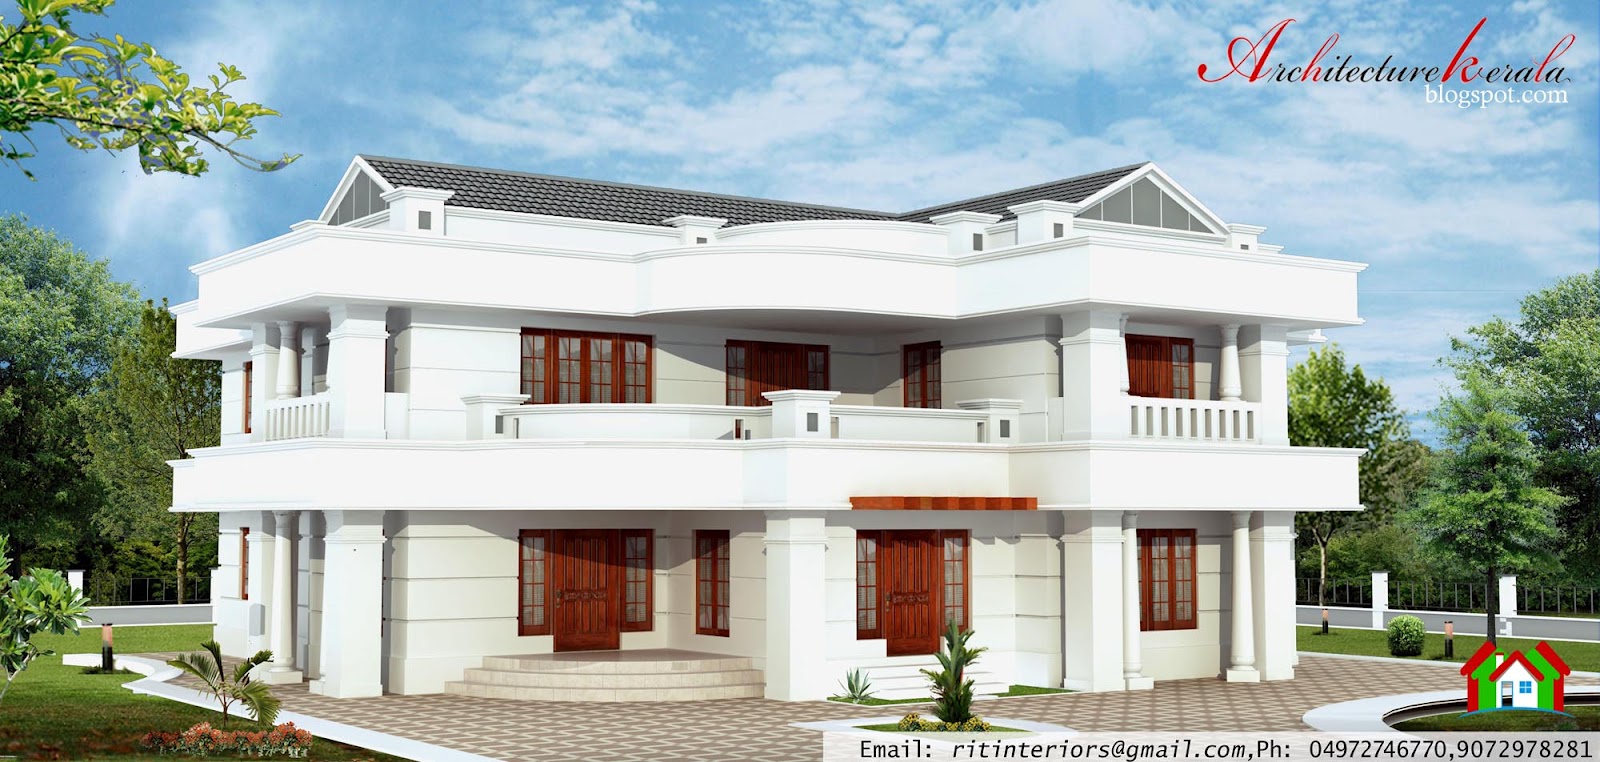 Architecture Kerala: 4 BEDROOM, LARGE KERALA HOUSE PLANS